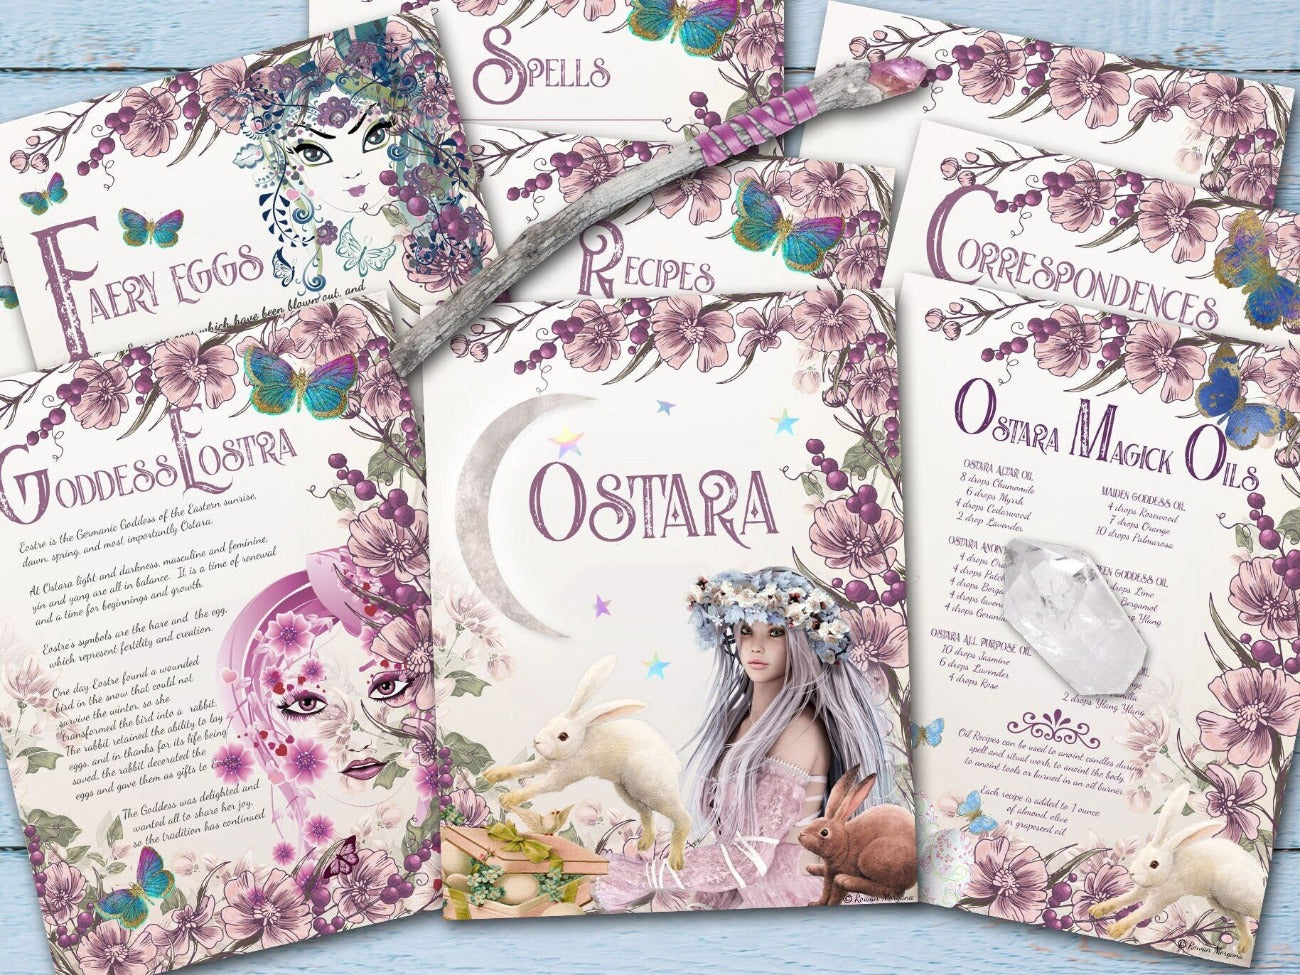 OSTARA BUNDLE, showing Ostara Title page, Ostara Magick Oils, Correspondences, Fairy Eggs, Goddess Eostra, and blank pages - Morgana Magick Spell